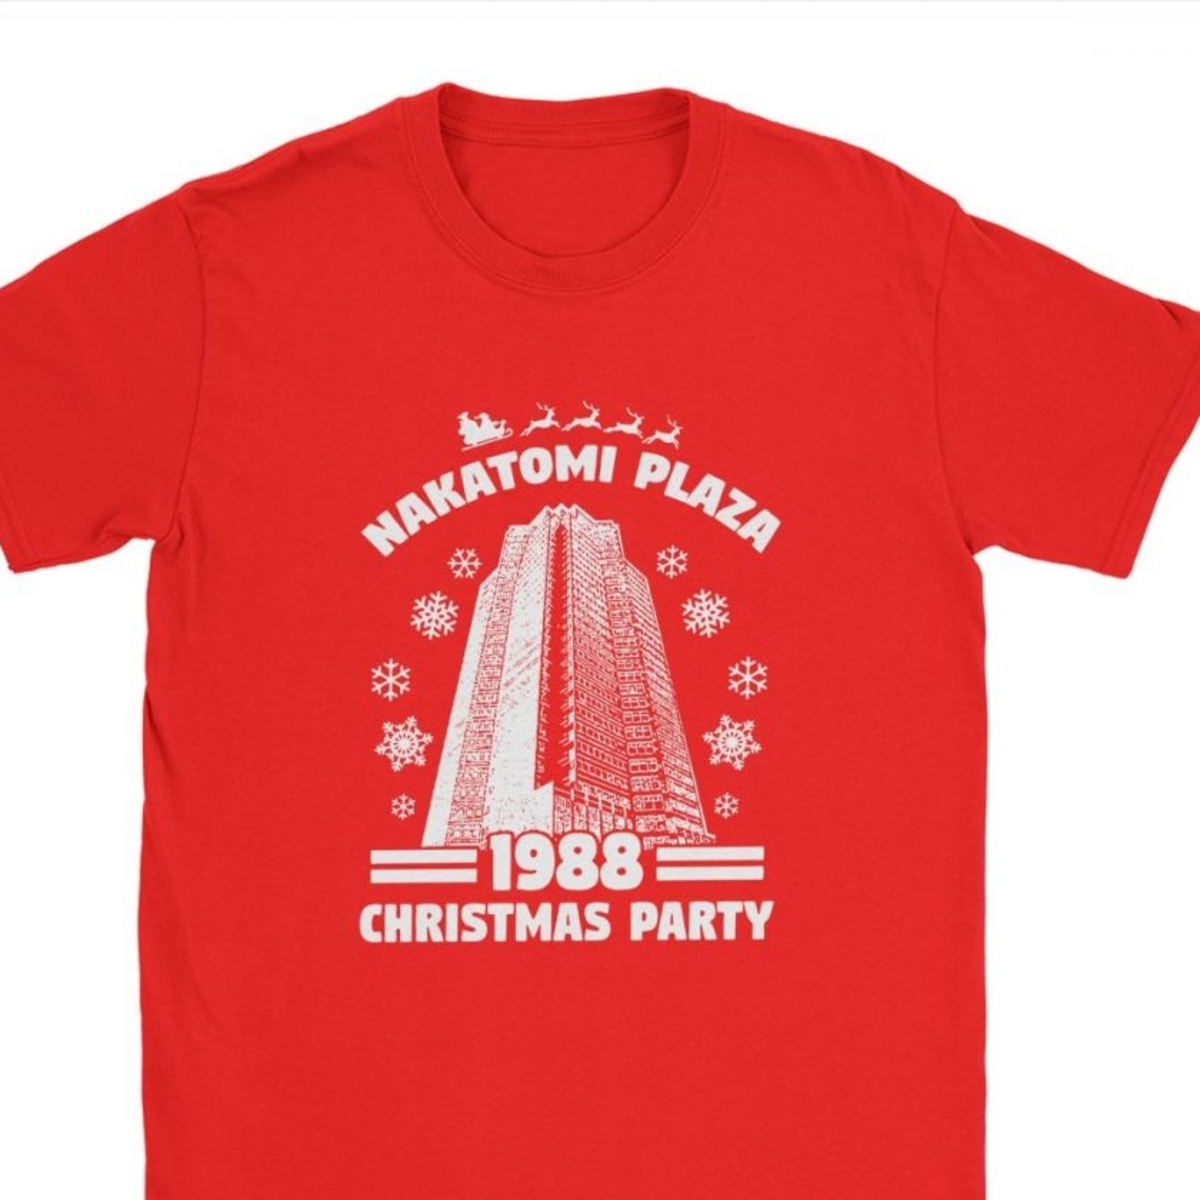 Men's Tshirts Nakatomi Plaza Funny Christmas Party 1988 Tee Shirt O Neck Clothes Cotton Tee Shirt